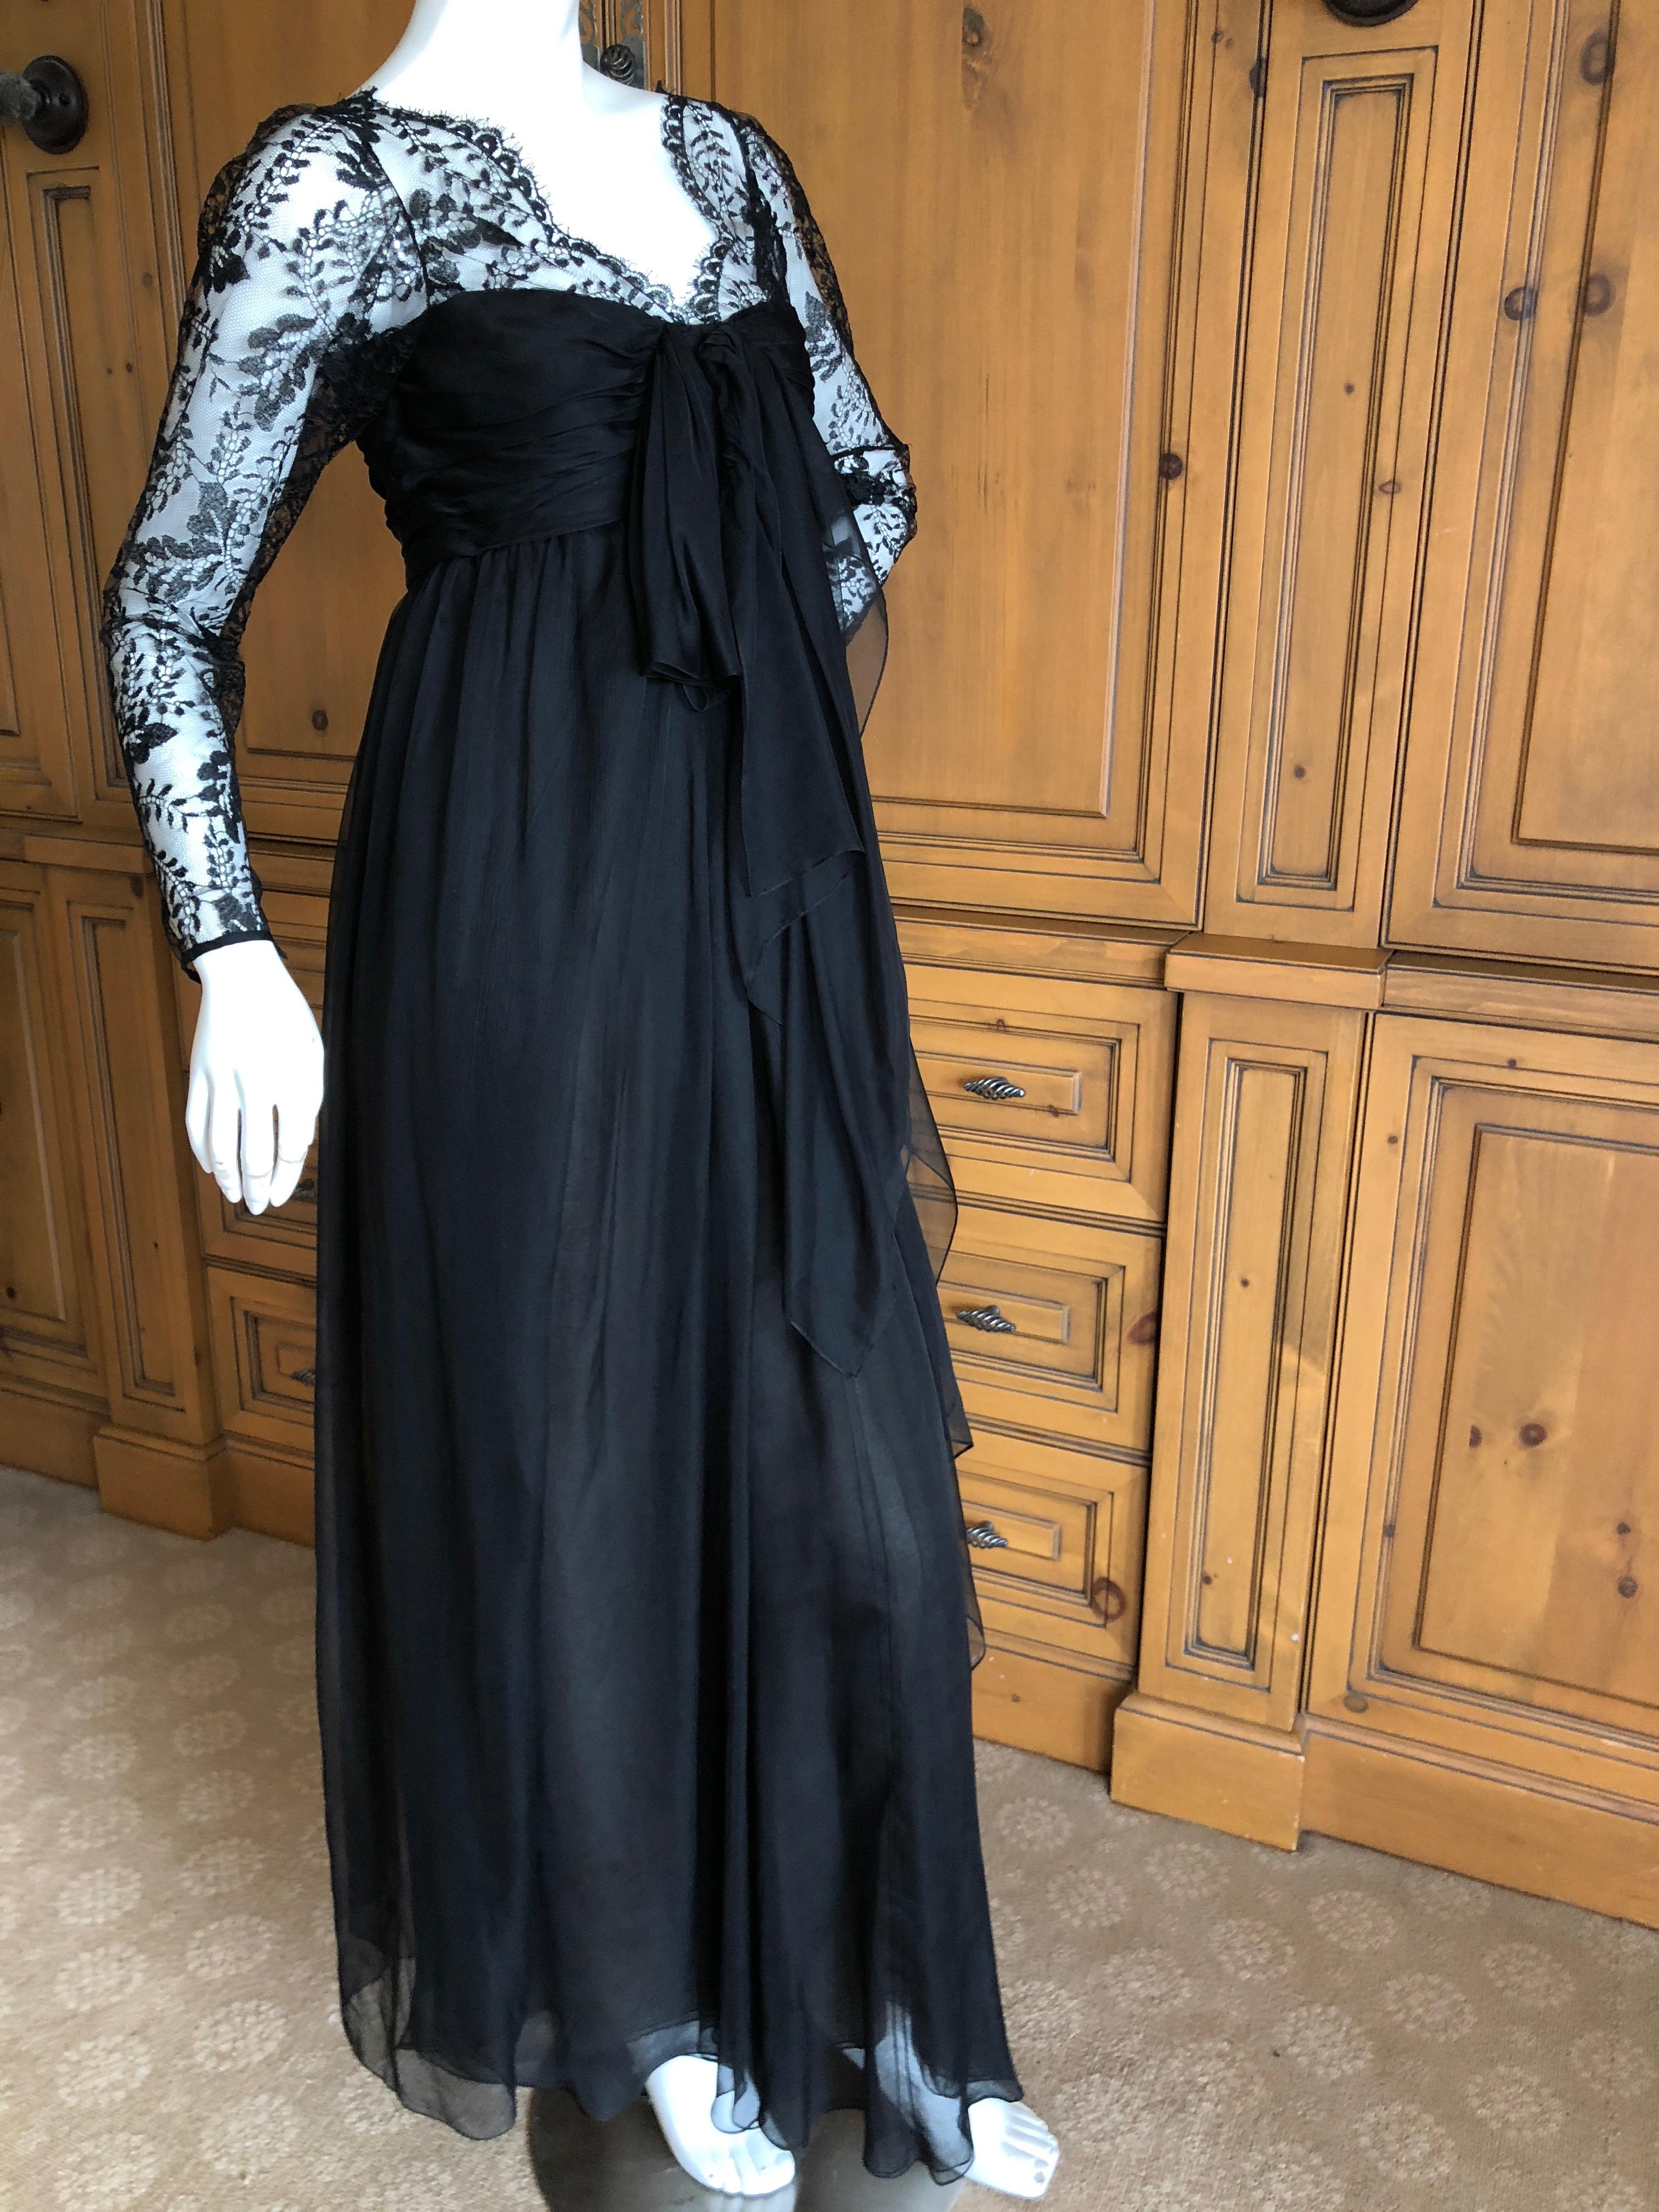 Yves Saint Laurent Numbered Haute Couture 1970's Black Lace Flou Evening Dress For Sale 7